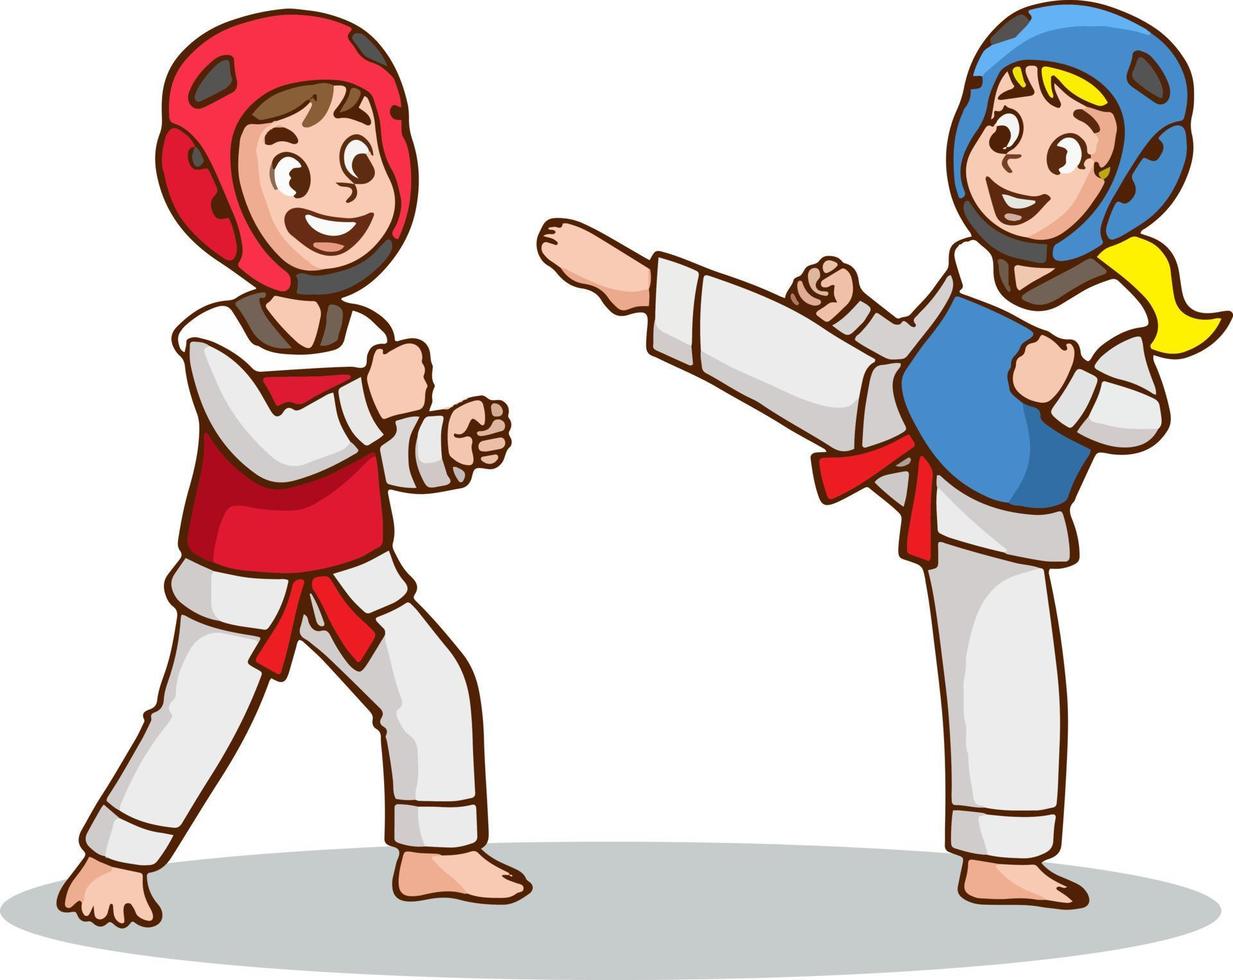 karikaturkinder, die kampfkunst in kimonouniform trainieren. karate- oder taekwondo-charakterillustration. vektor